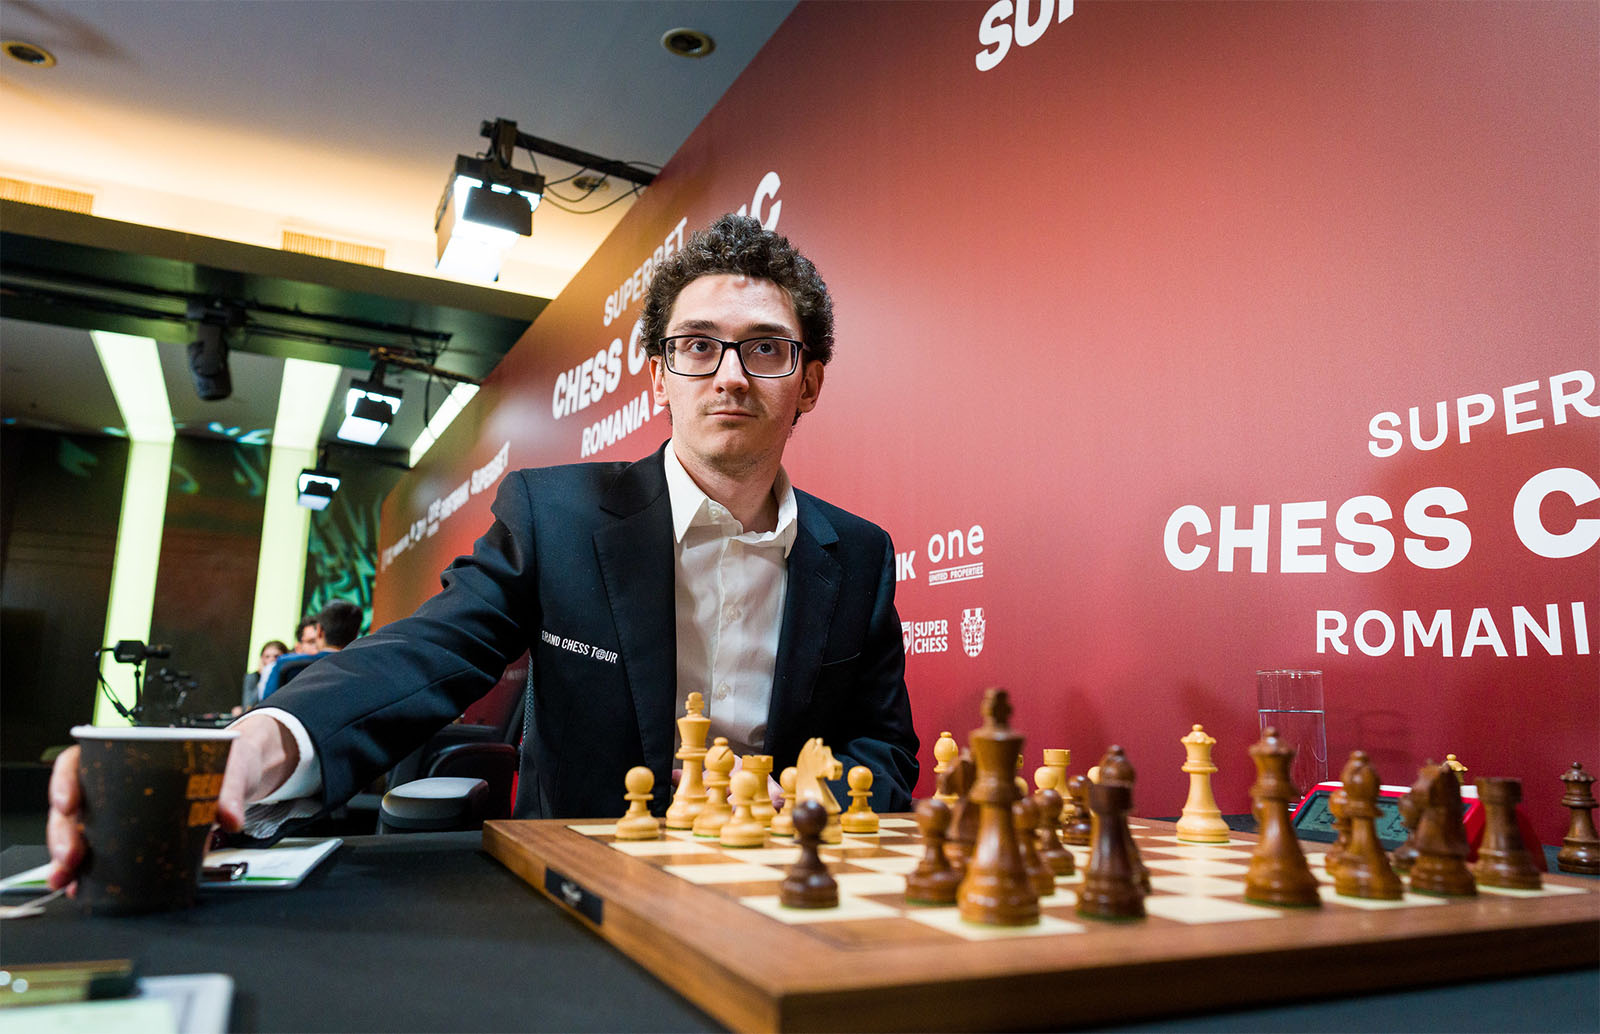 Superbet Chess Classic: Round 3 in Photos